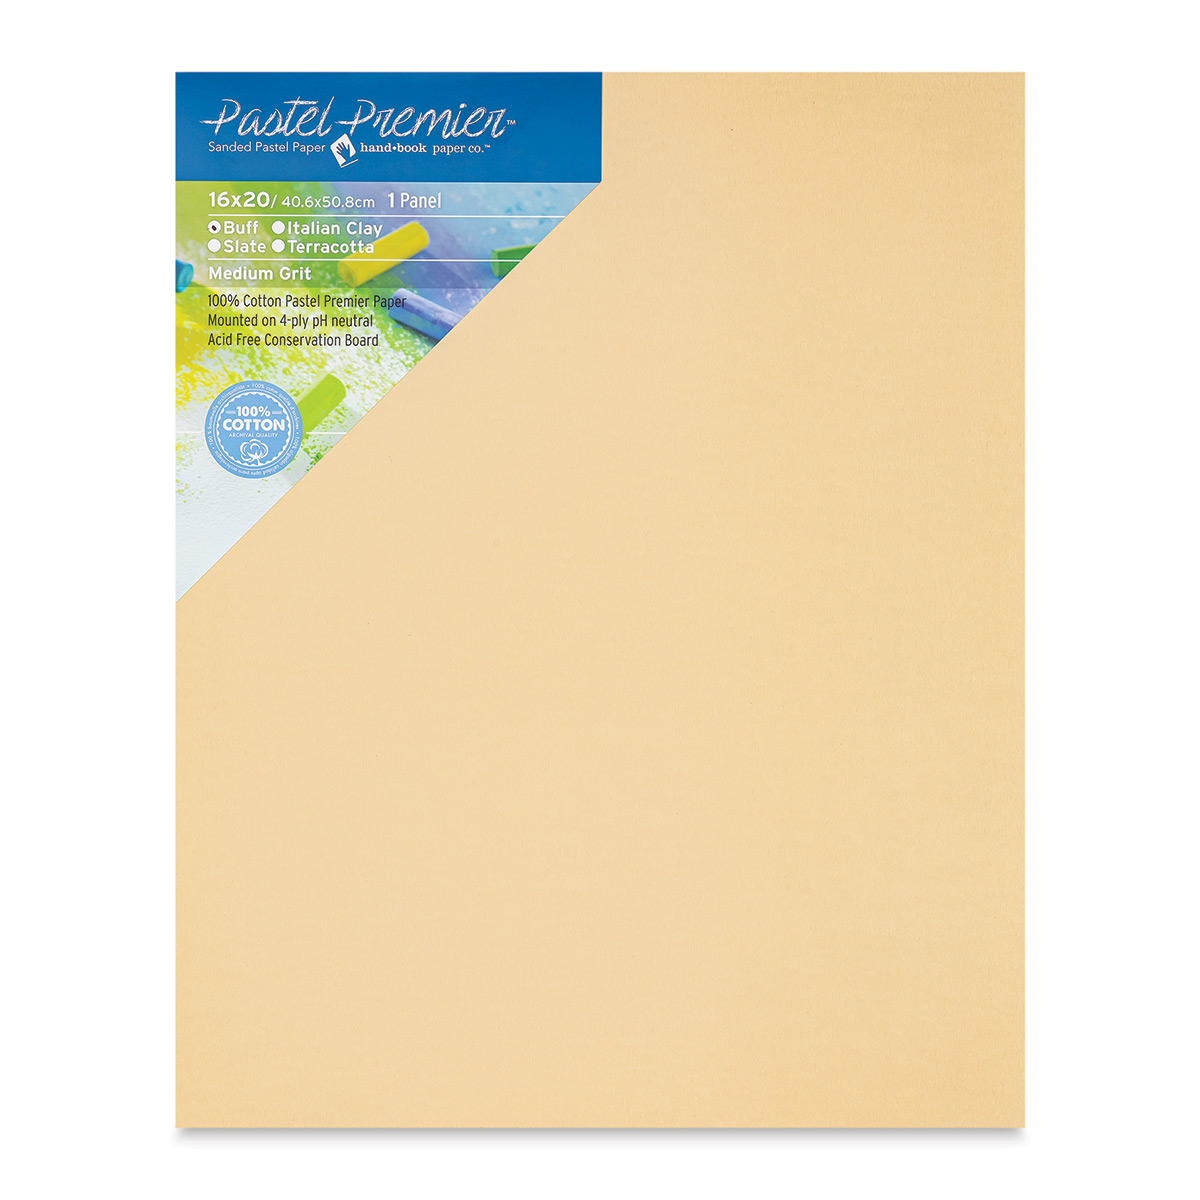 Handbook Paper Co. Pastel Premier Sanded Paper Sheets and Rolls